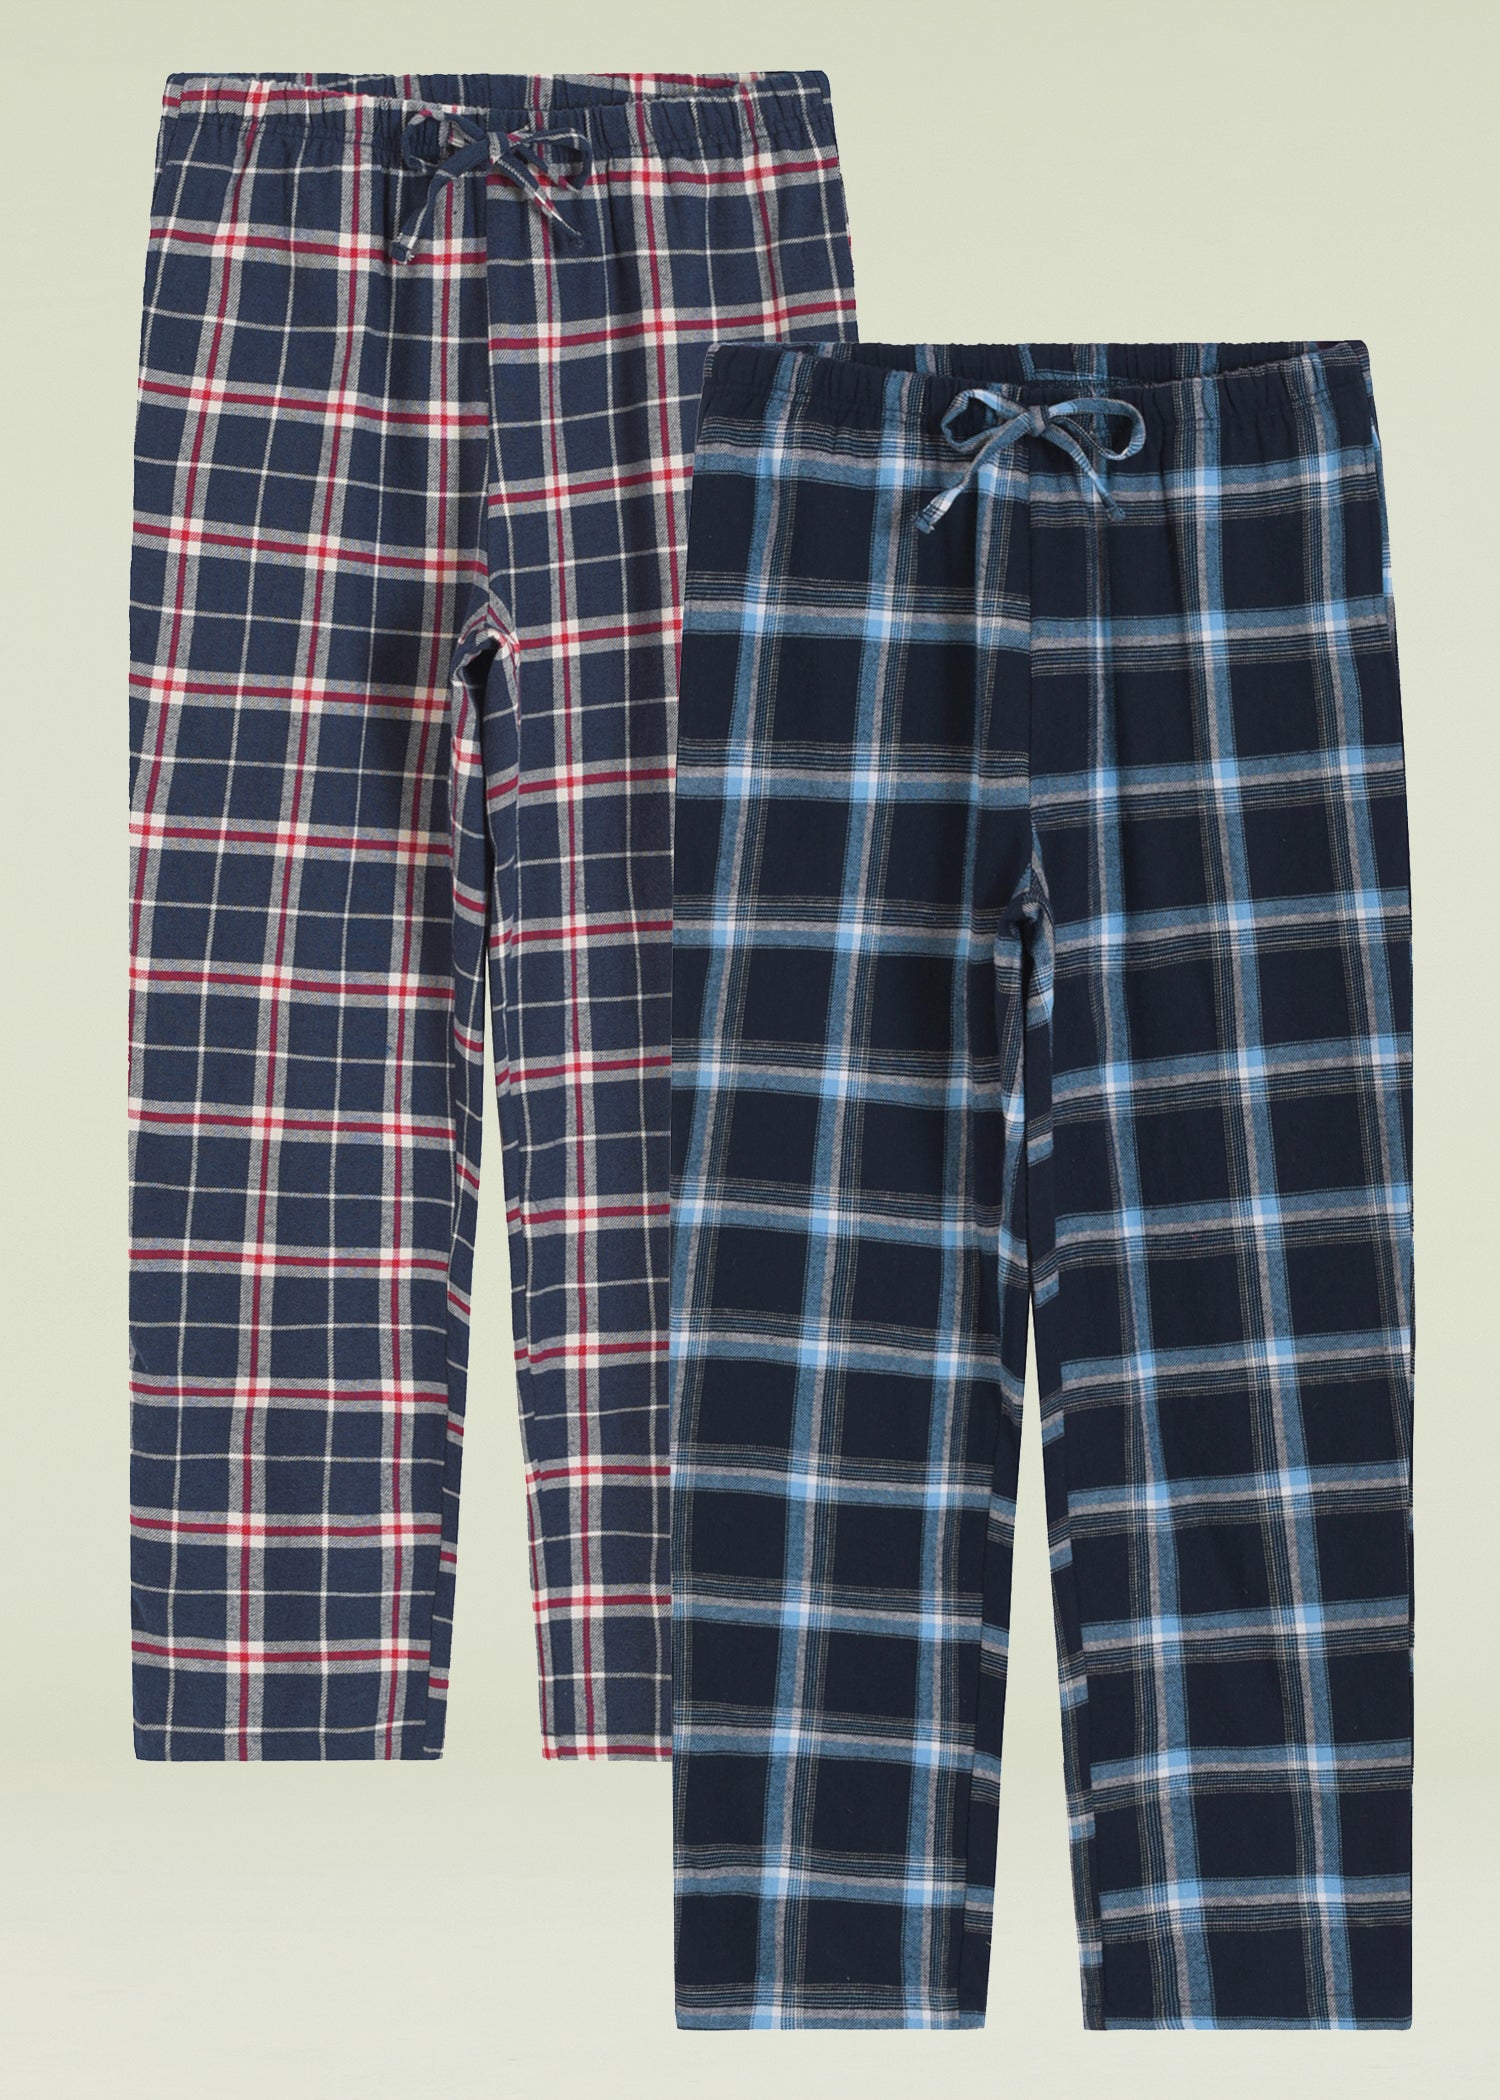 Men's Flannel Pajama Shorts Cotton Plaid Shorts Sleep Lounge Pockets  Drawstrings